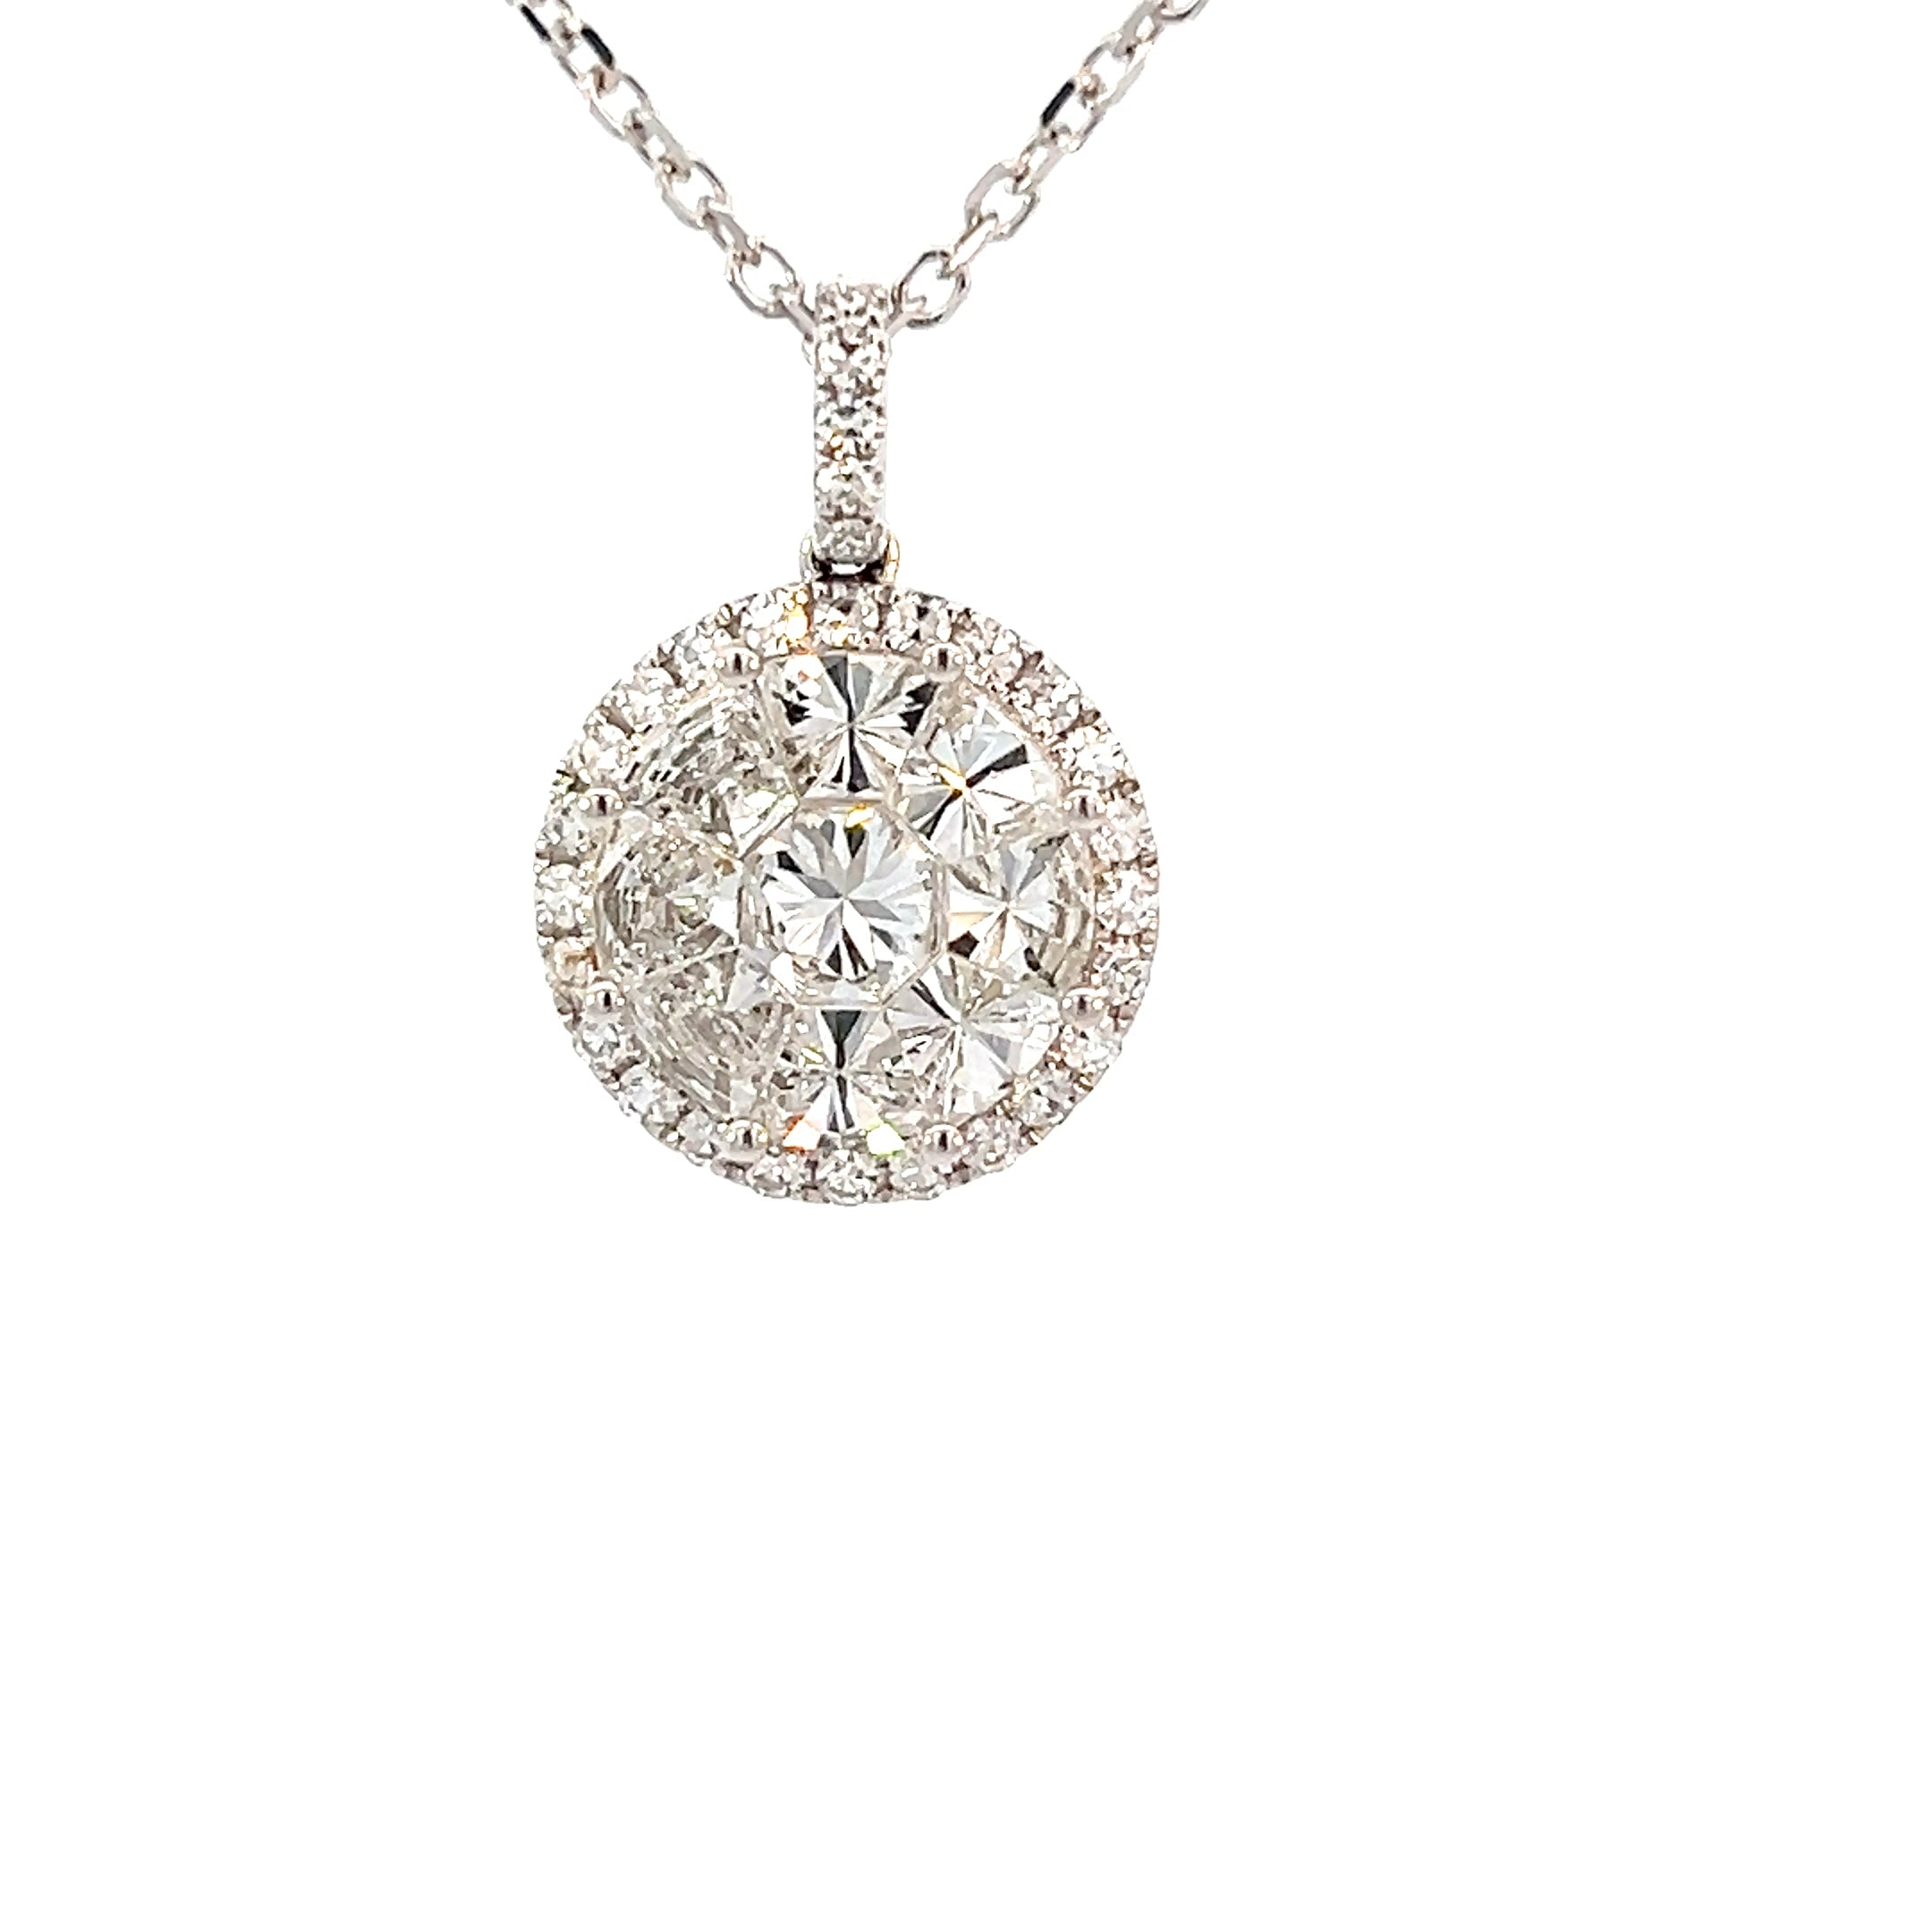 Sparkling Solitaire Diamond Pendant in 18k White Gold